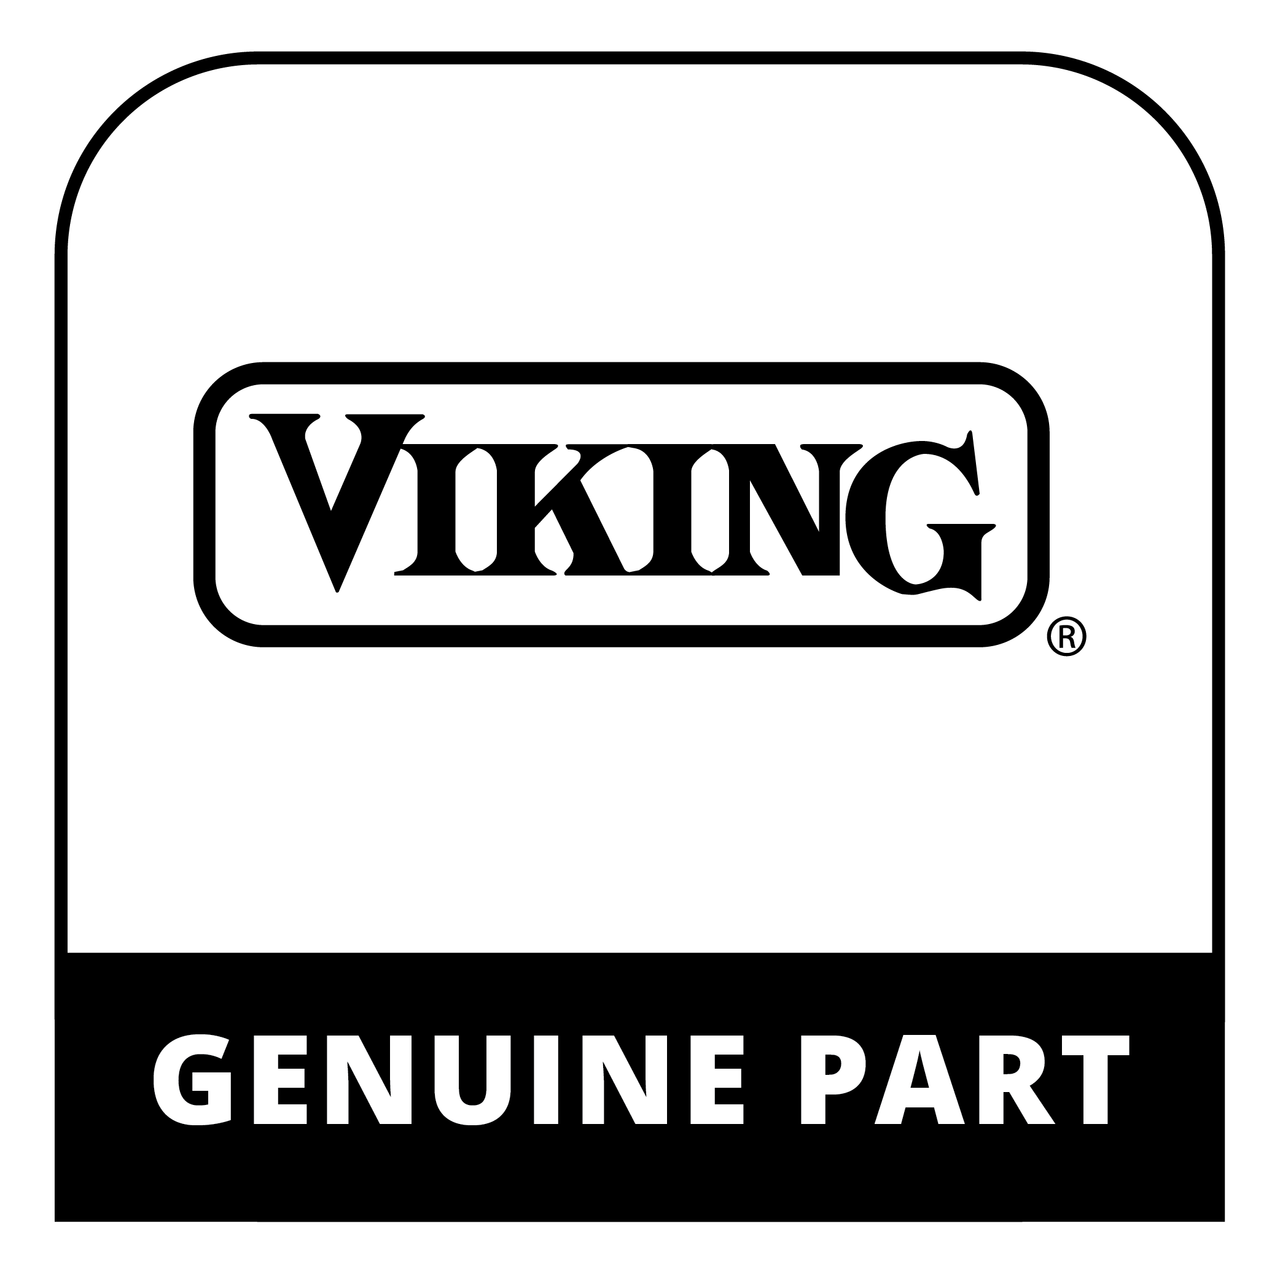 Viking PS500019FG - 30" PRO DOOR SKIN SERVICE KIT - Genuine Viking Part